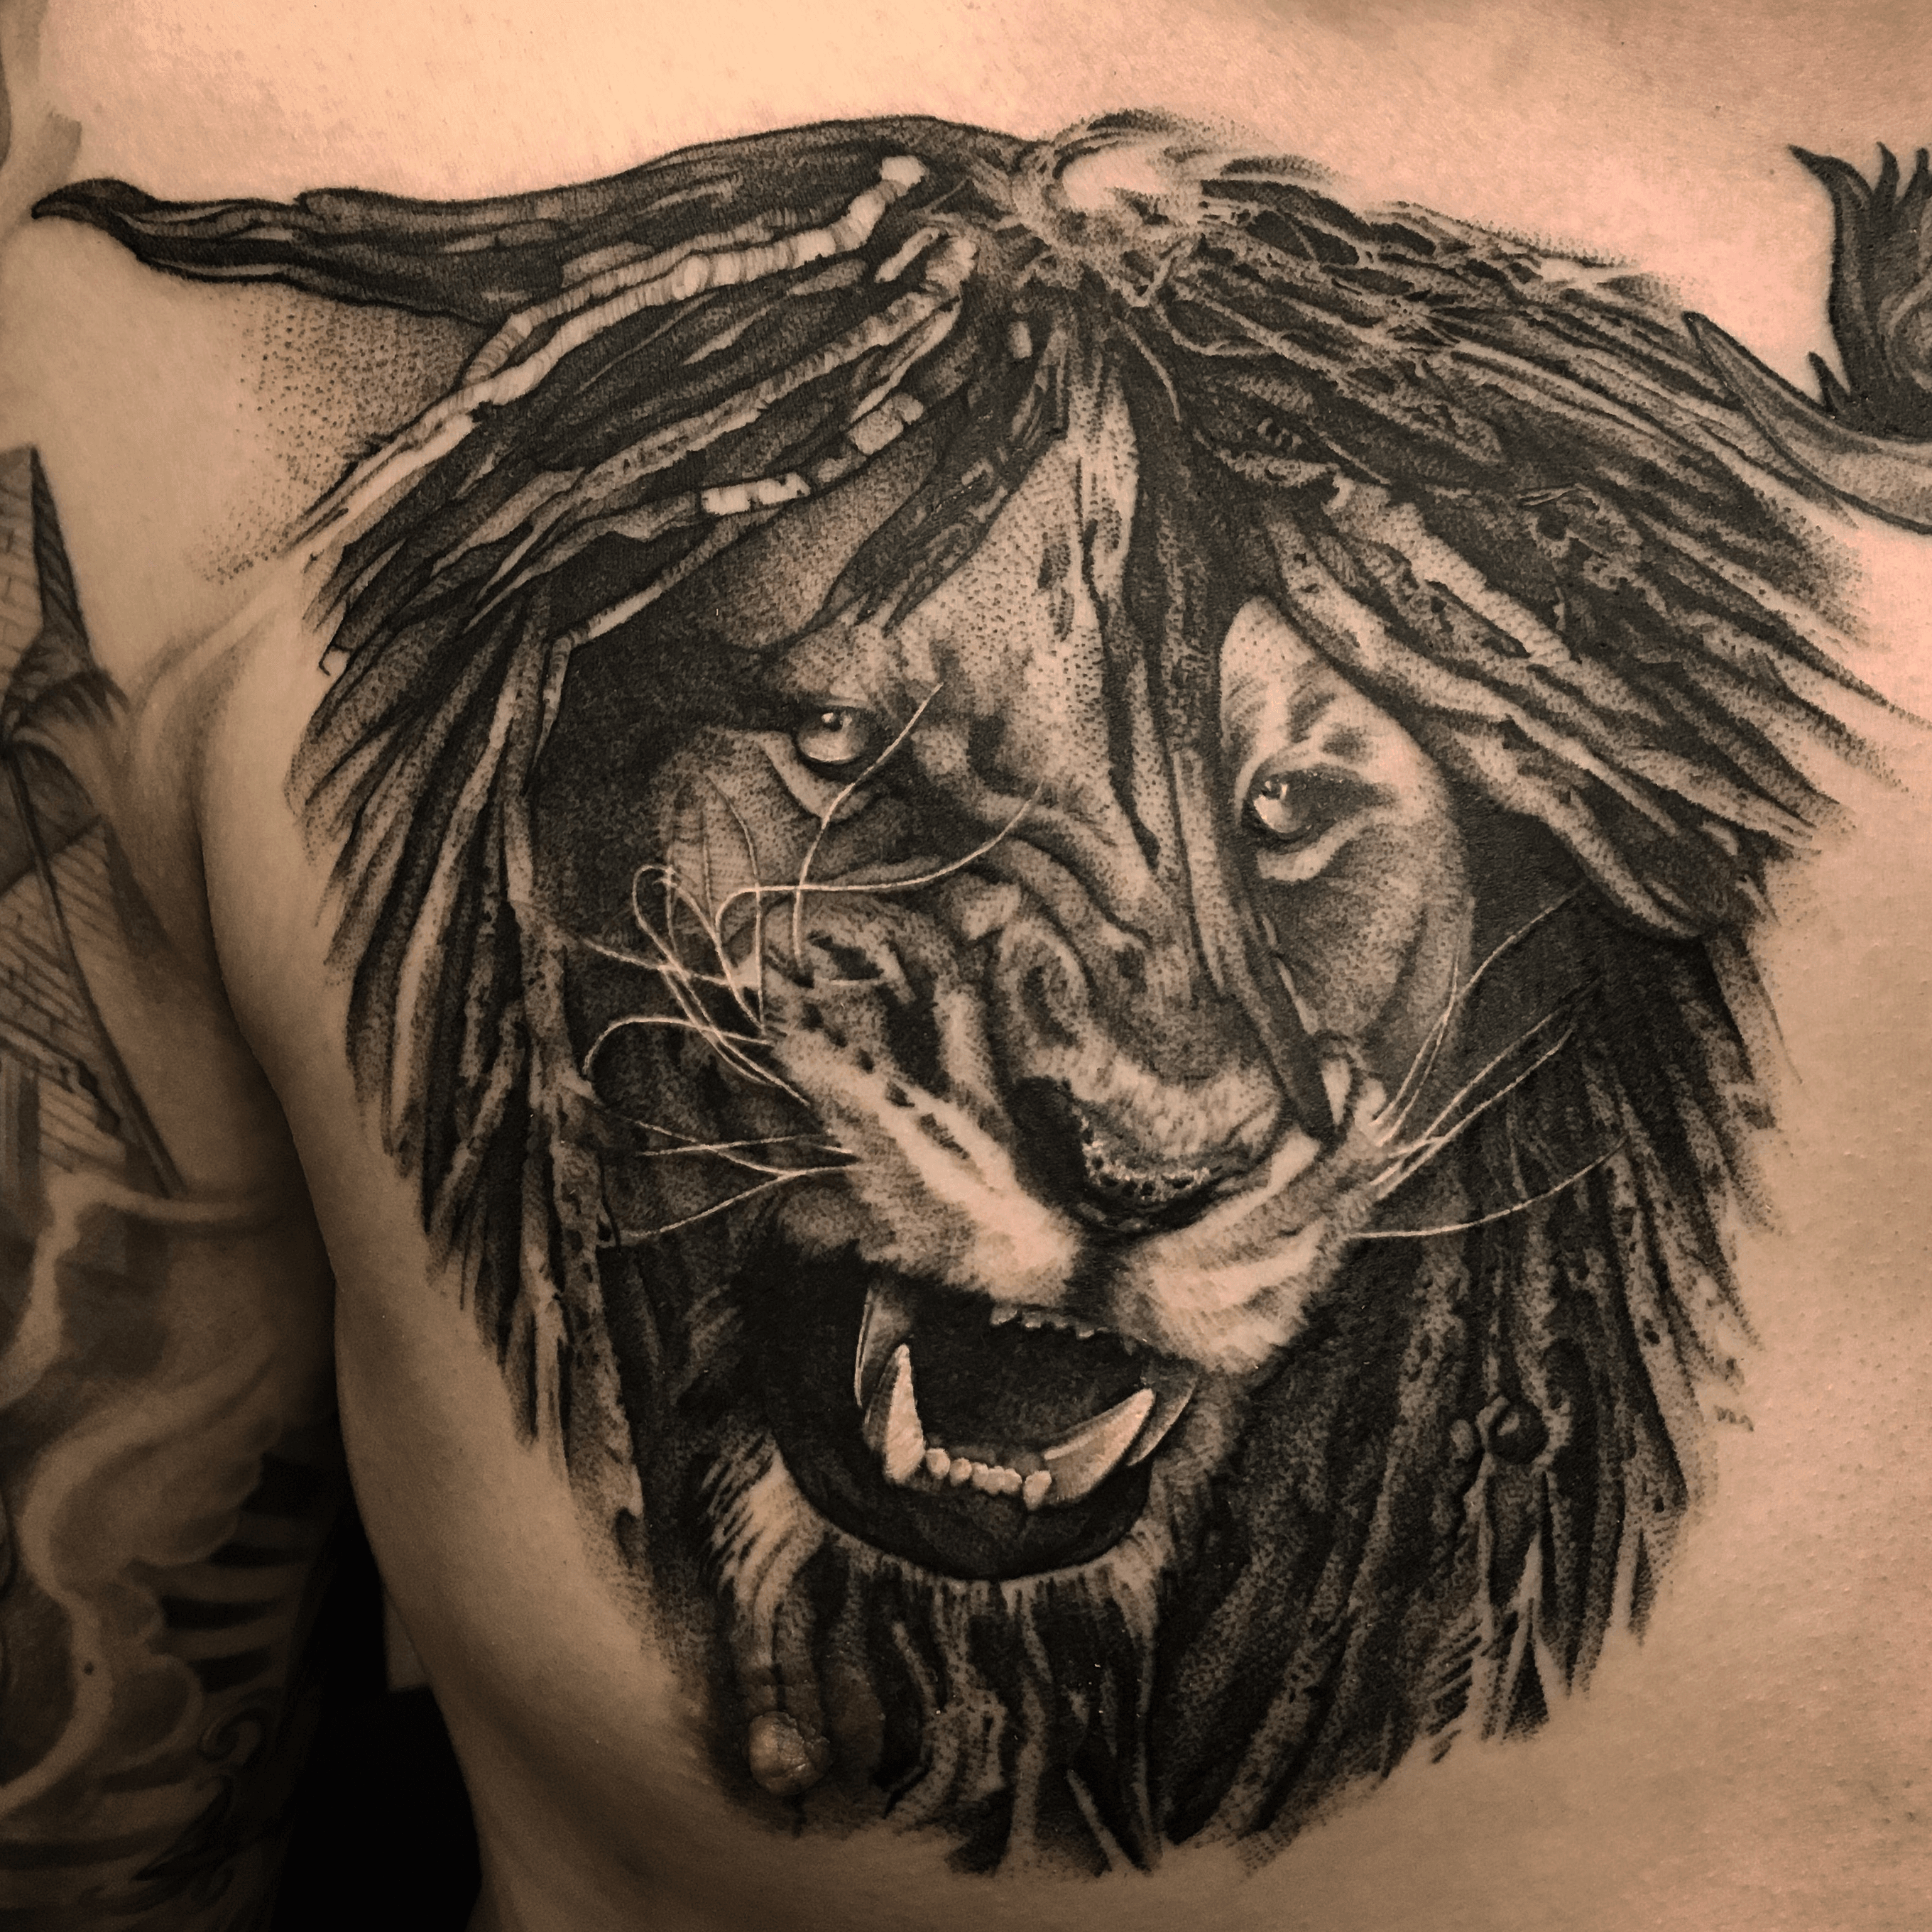 Tattoo uploaded by Kxng Danny  Lion with Dreadlocks wearing a Crown   Tattoodo